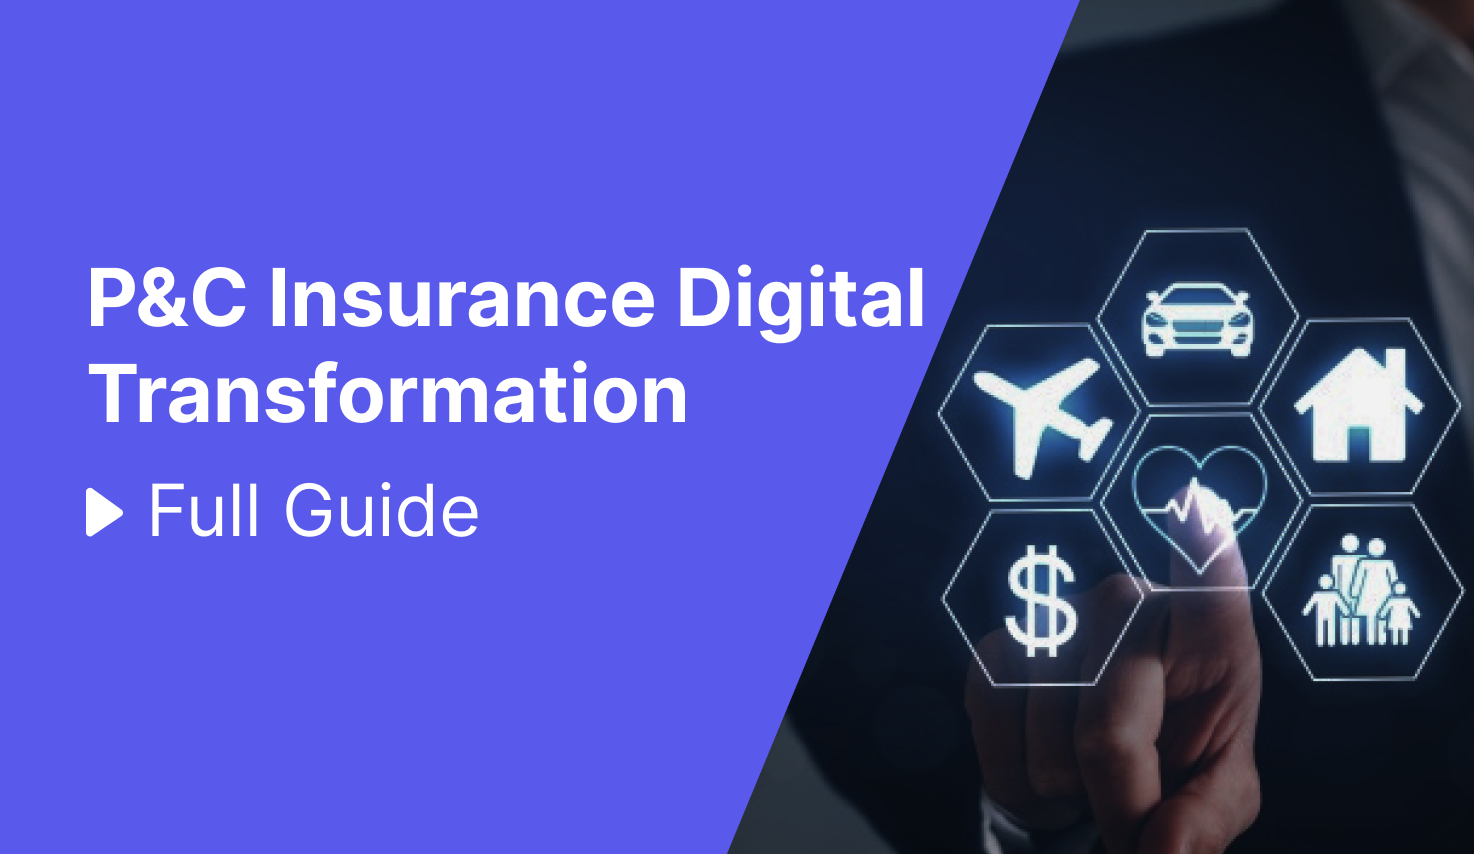 P&C Insurance Digital Transformation